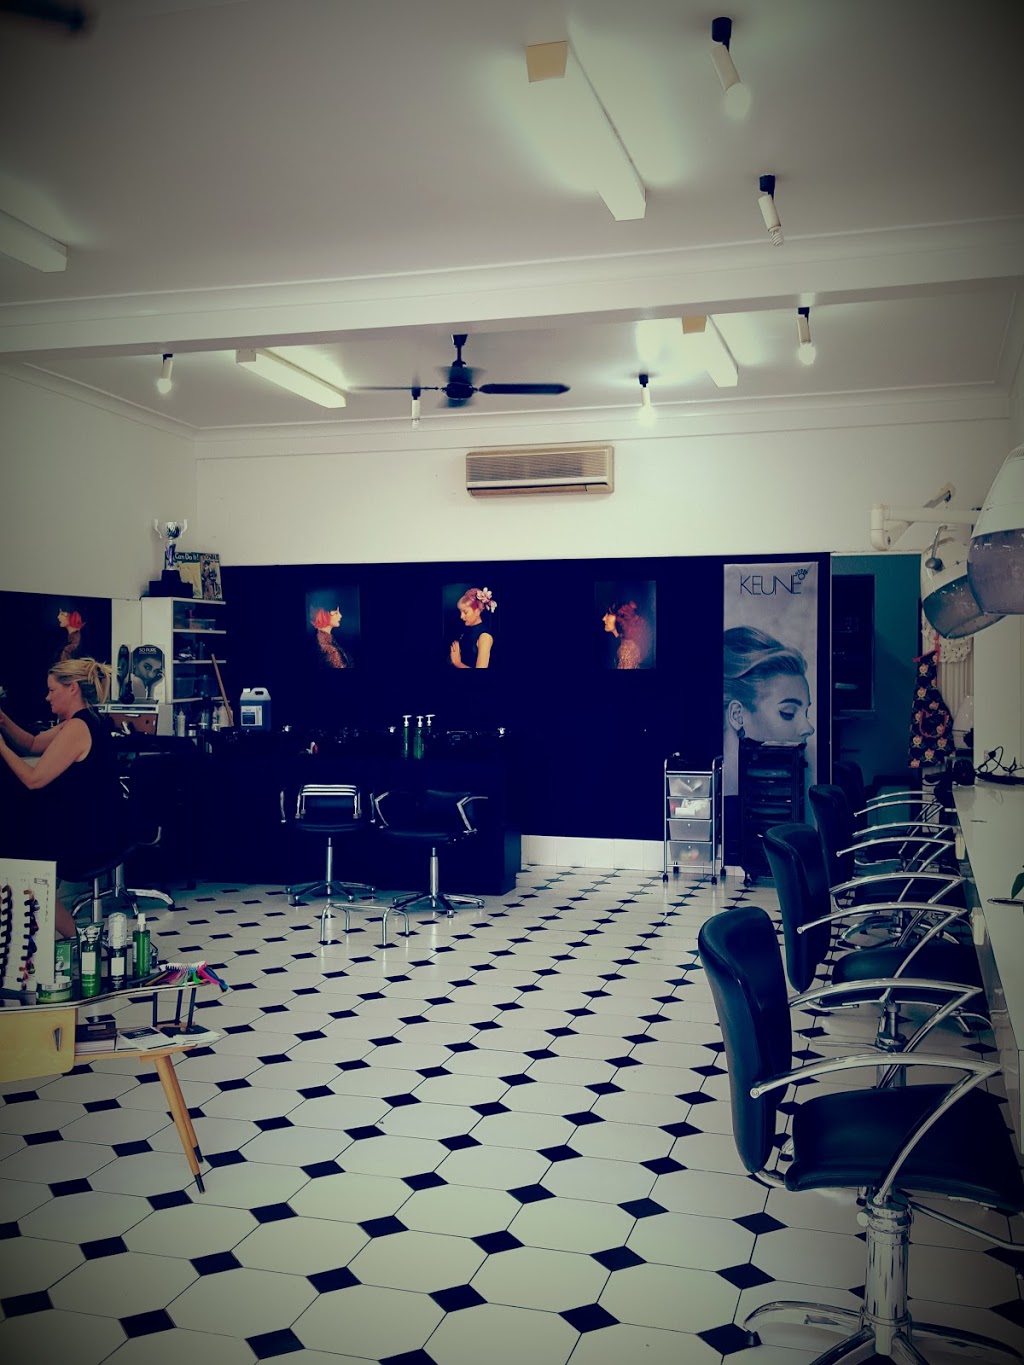 Rebecca Knight Hair Salon | hair care | 23 Woodstock Rd, Carlingford NSW 2118, Australia | 0431272125 OR +61 431 272 125